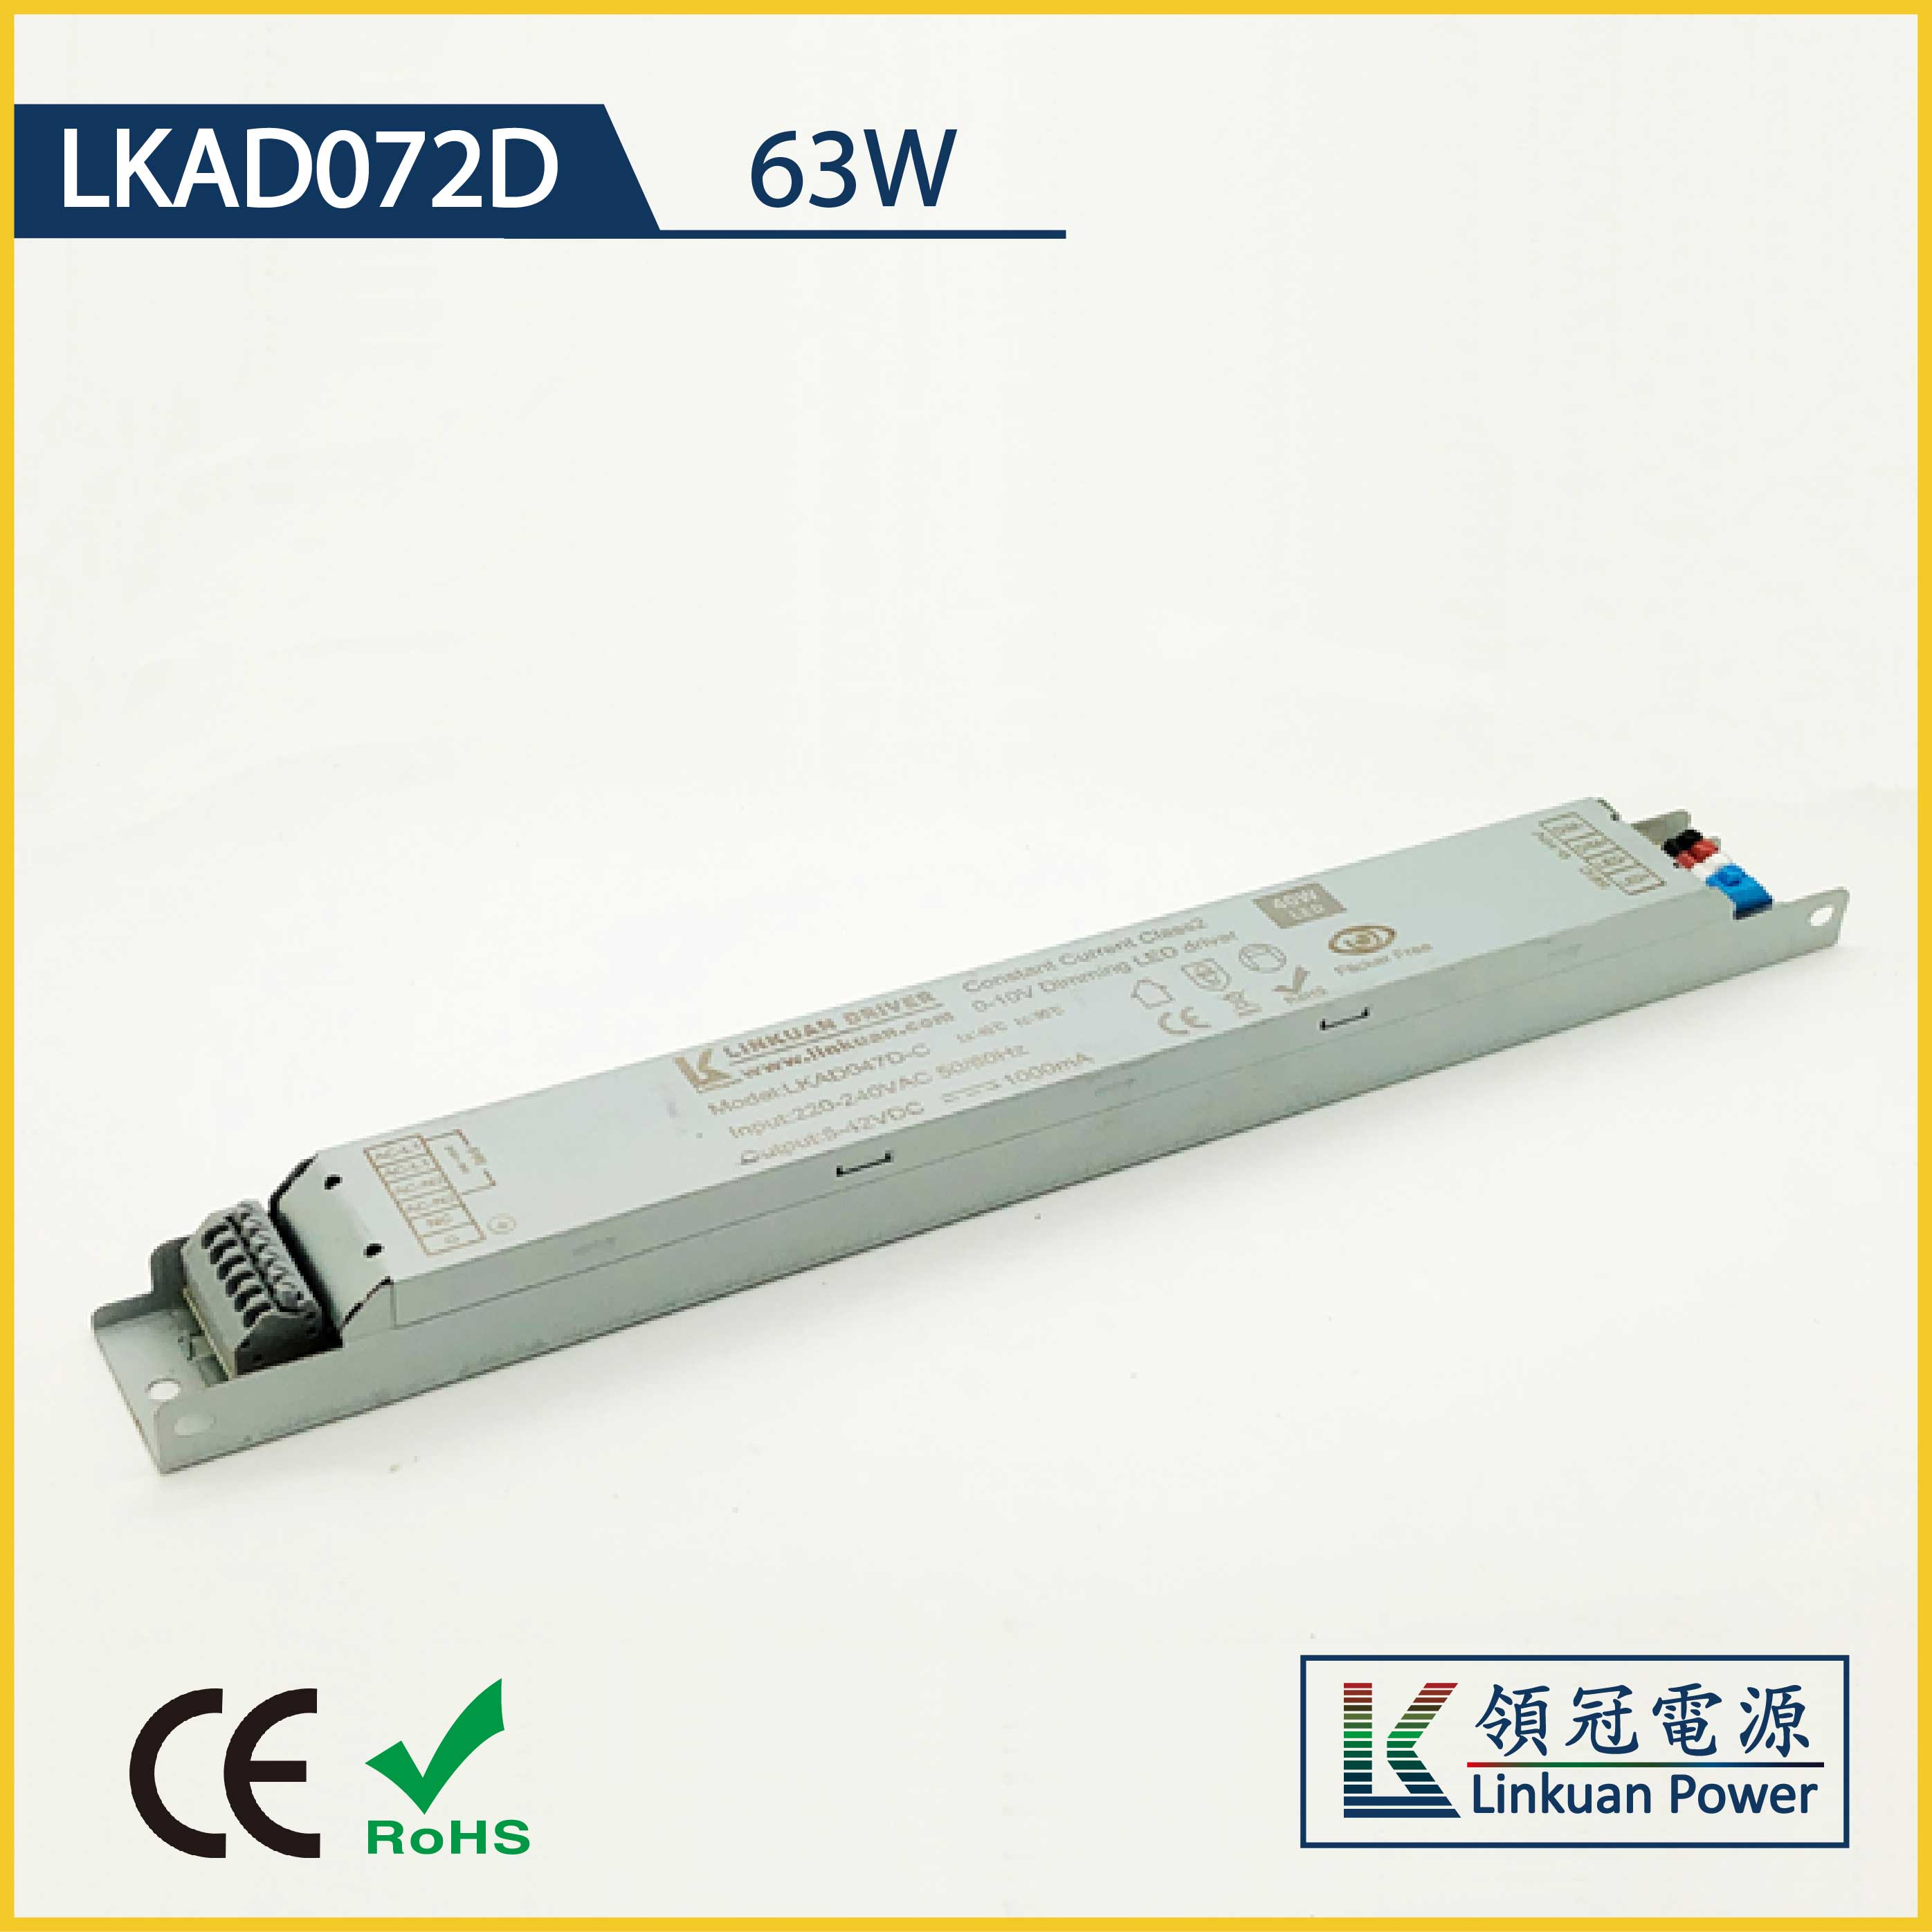 LKAD072D 63W 25-42V 1500mA Linear Lamp triac dimmable led driver